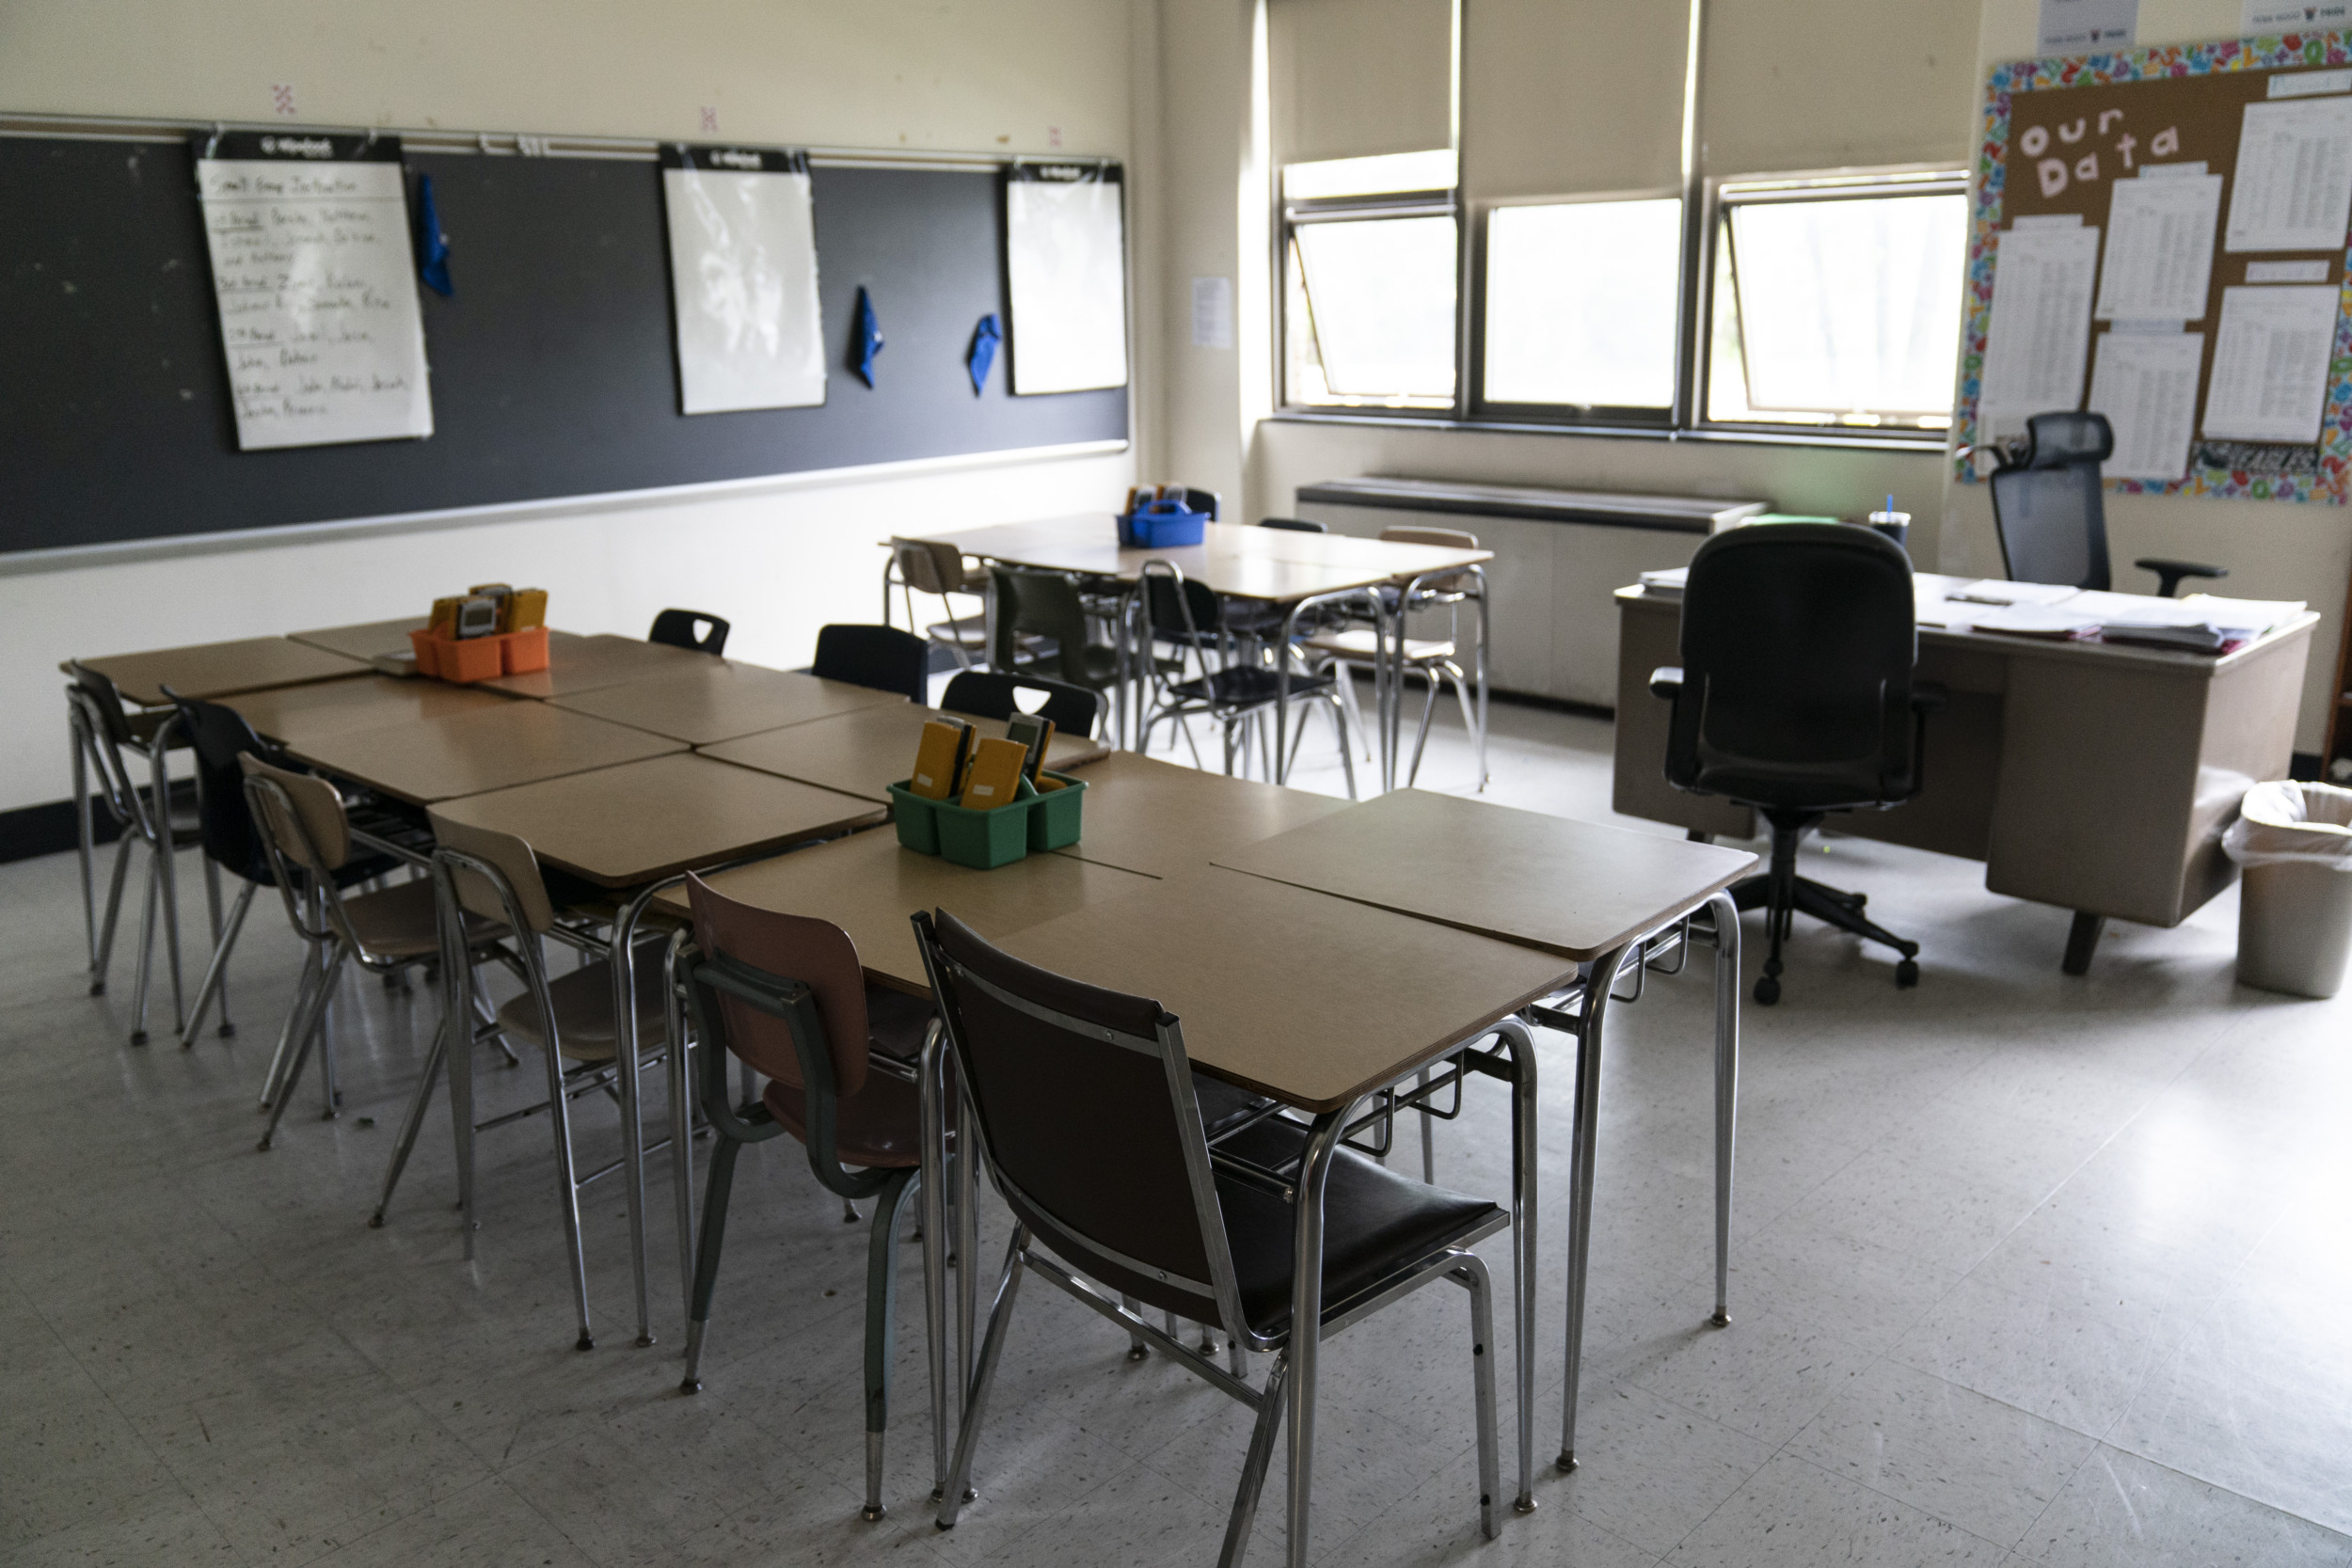 Teacher Salaries; Long shot of classroom full of empty desks.